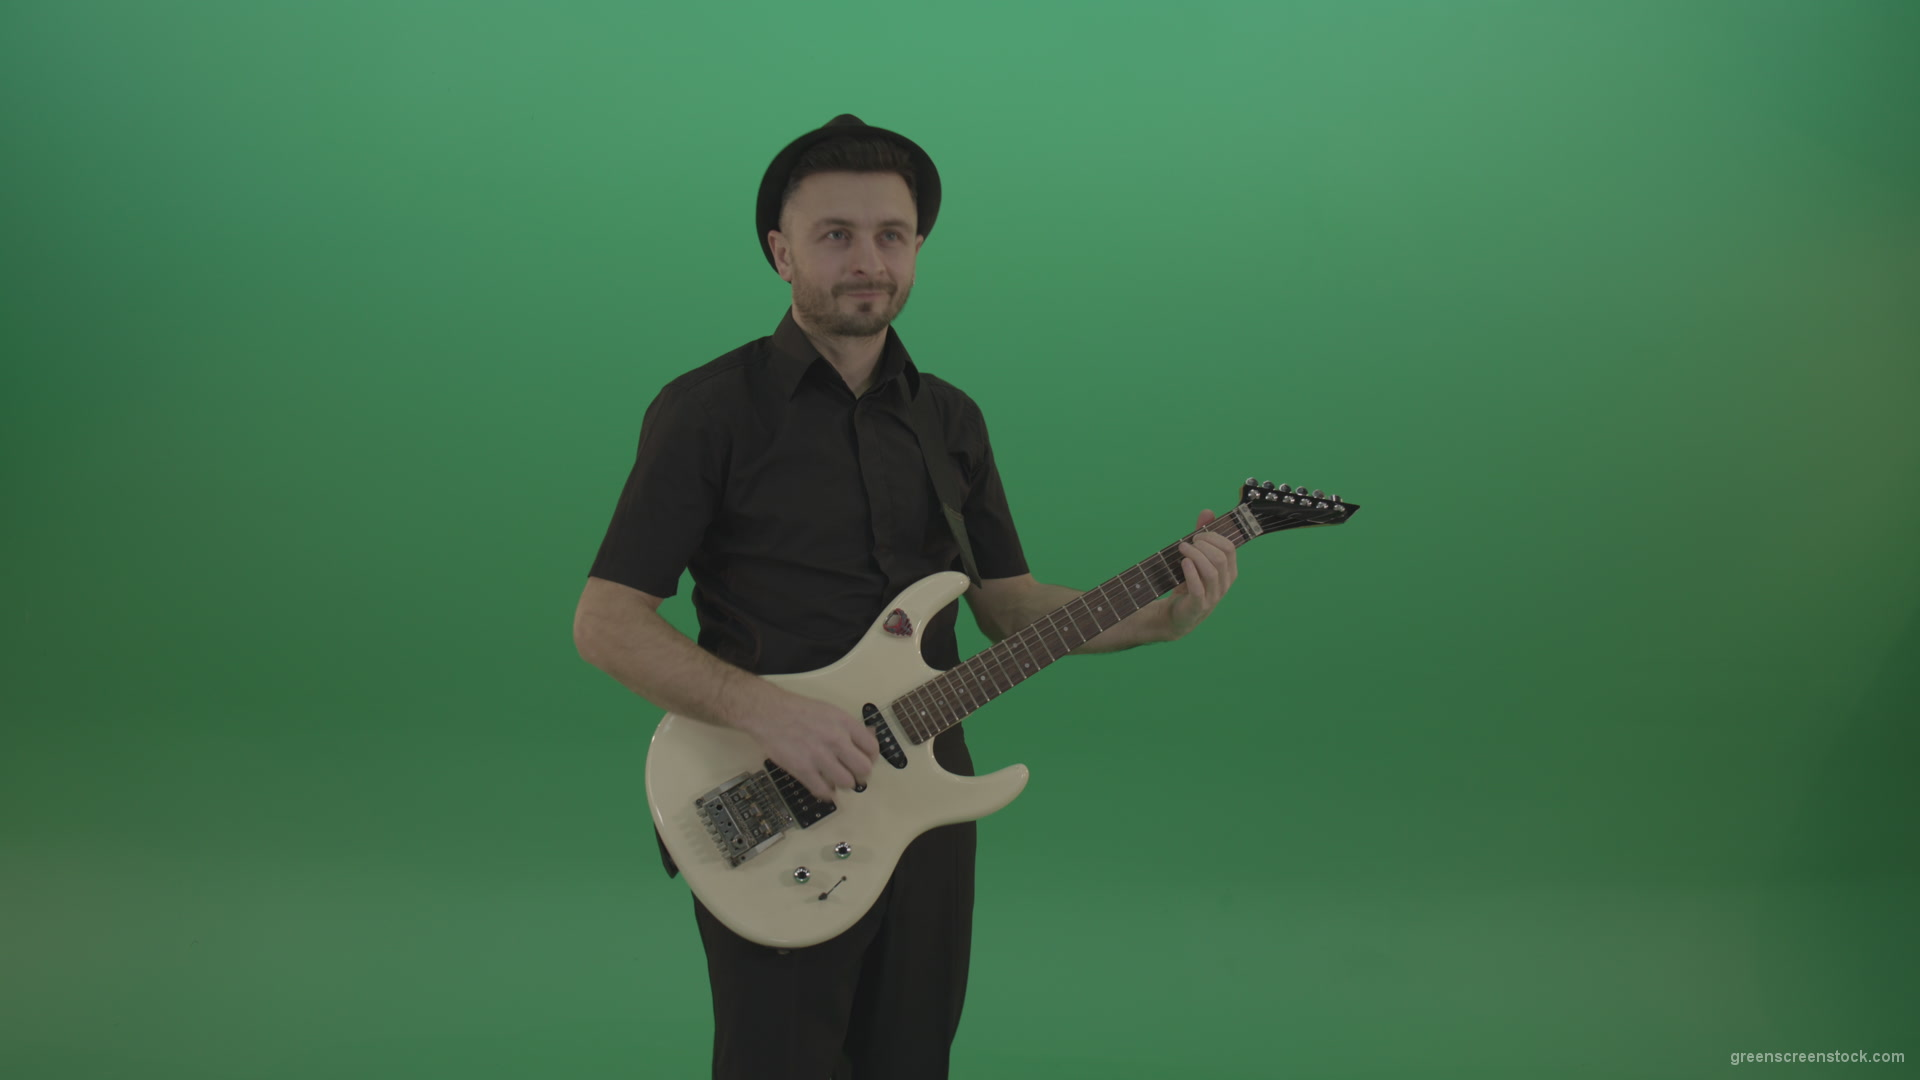 Man-in-black-playing-white-guitar-on-green-screen_007 Green Screen Stock